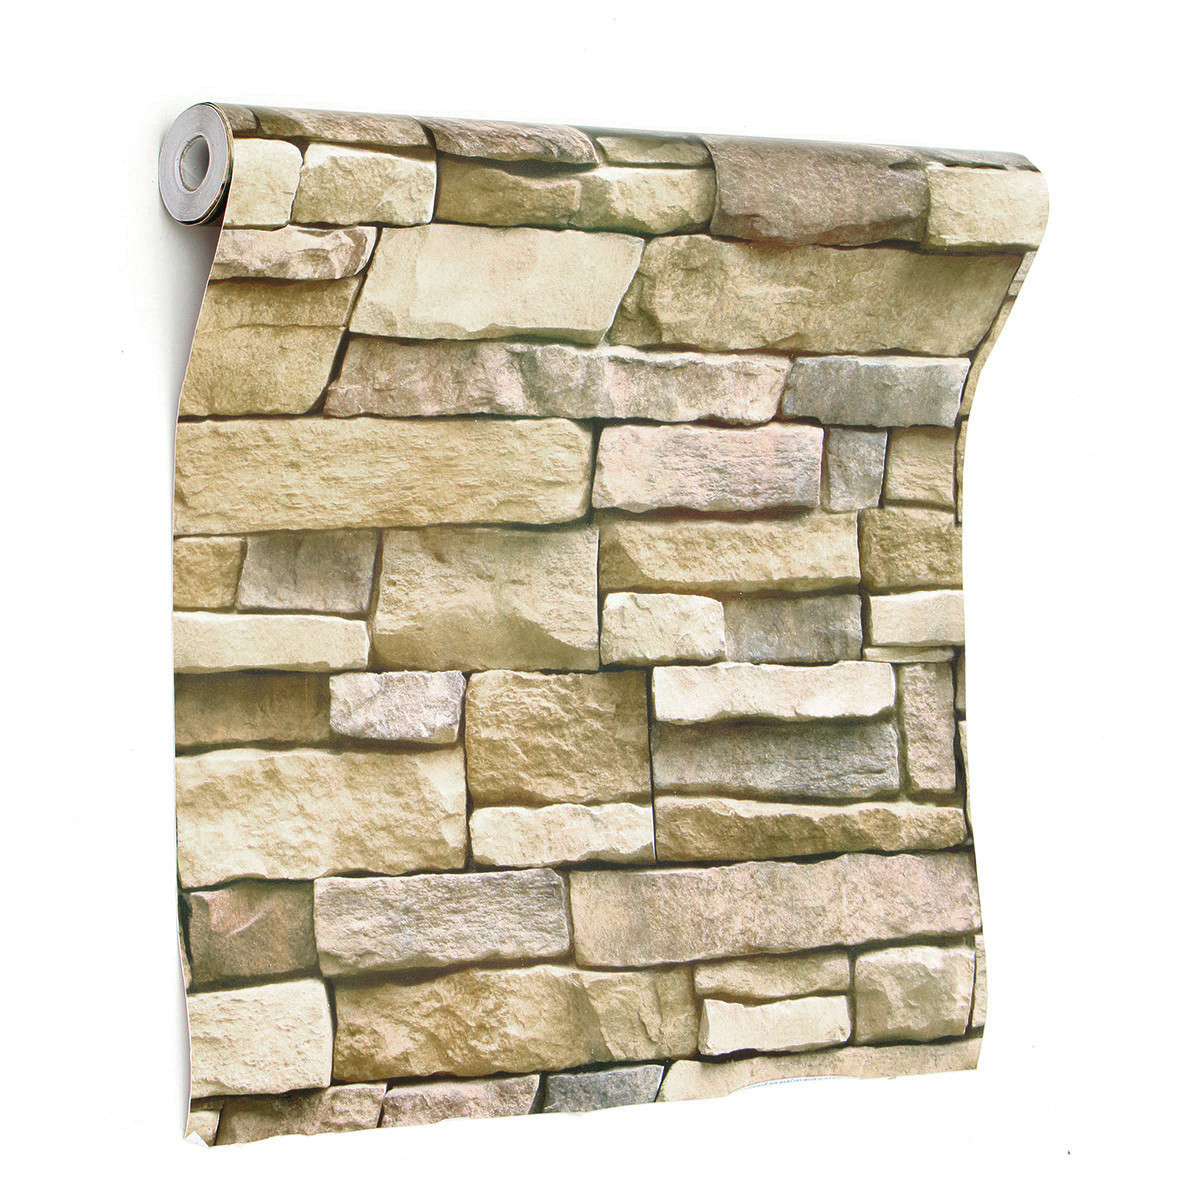 

3D Wall Paper Brick Stone Pattern Sticker Rolls Self-adhesive Backdrop DIY Room Decor